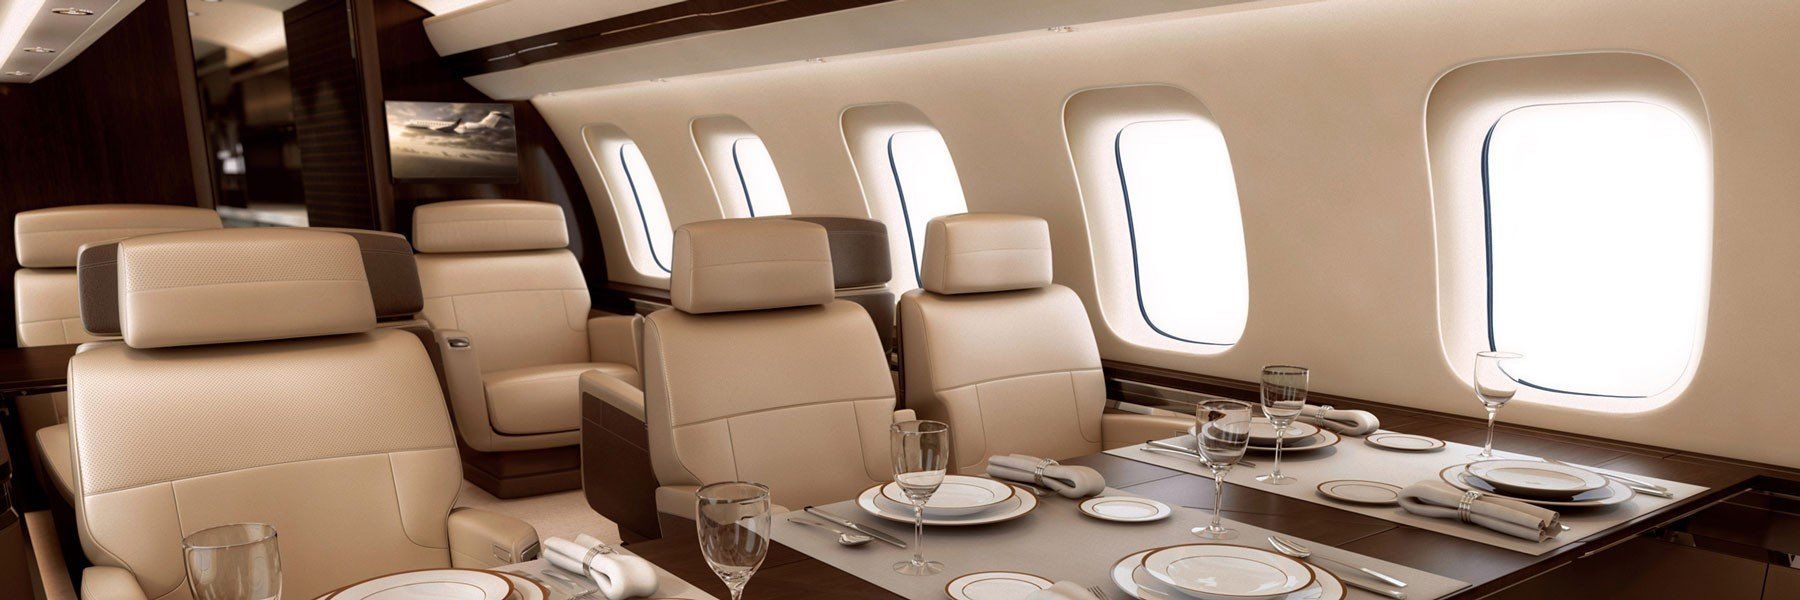 Bombardier Global 7500 Charter Flight